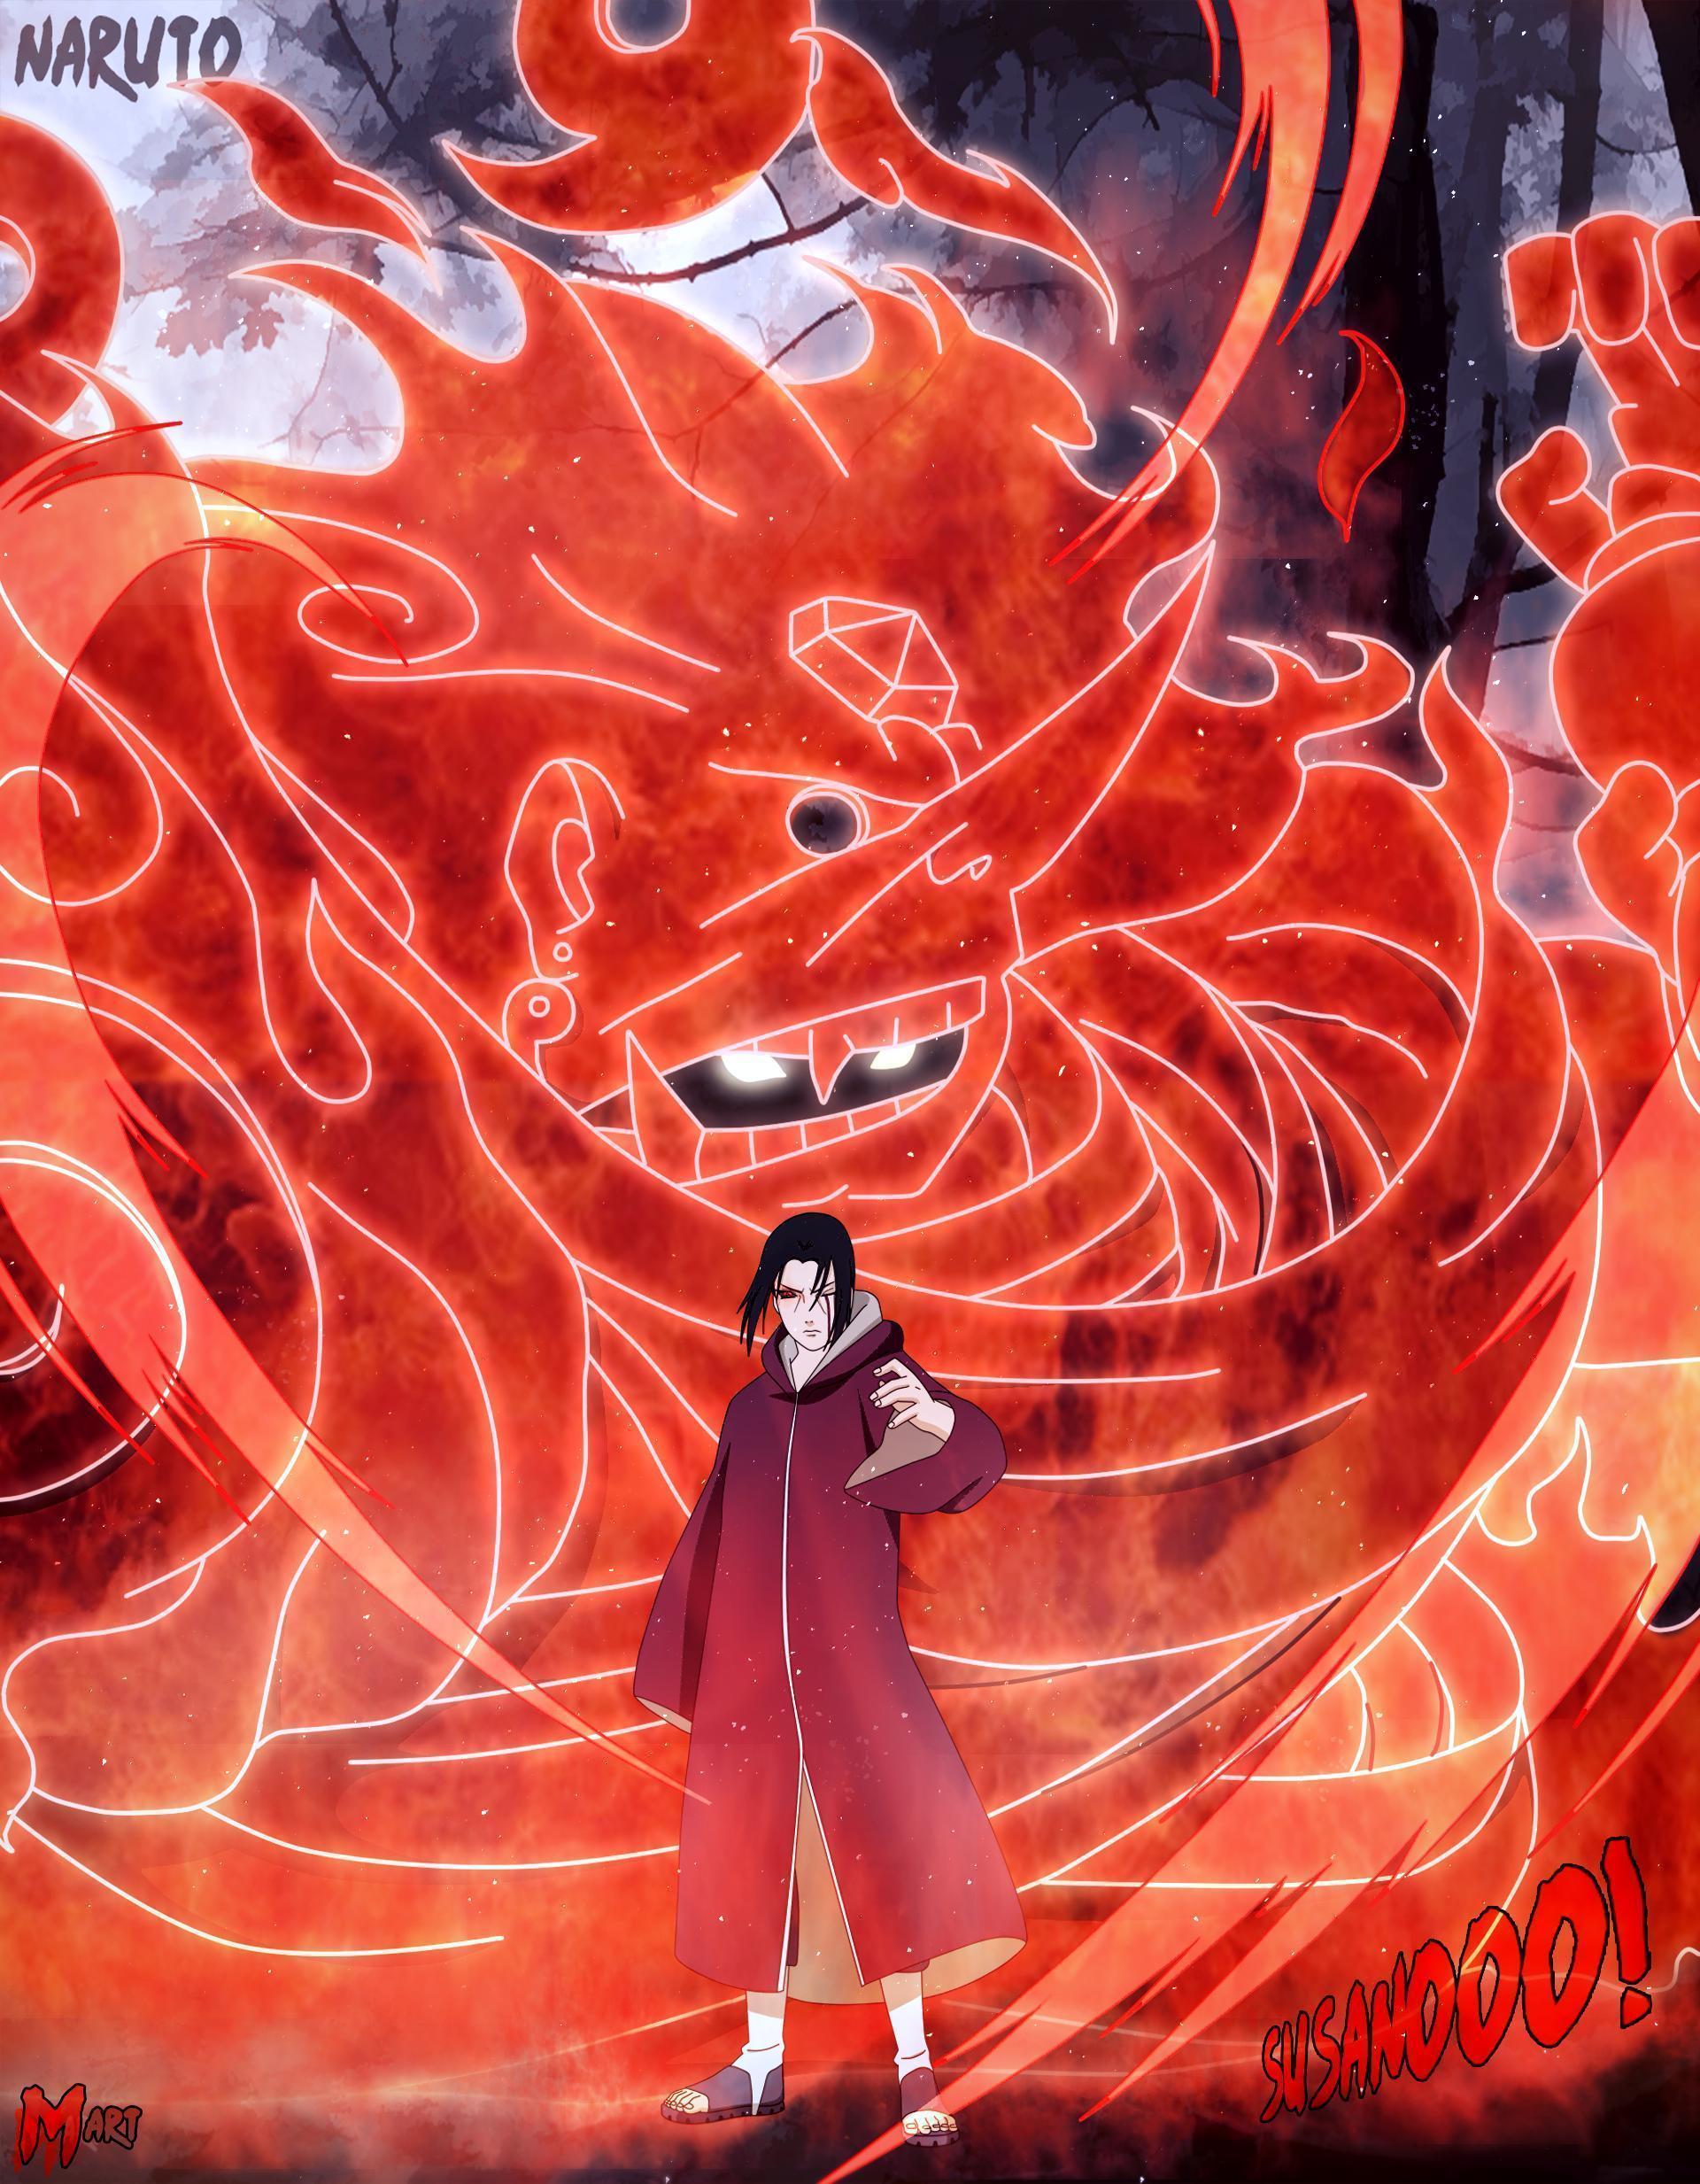 image For > Naruto Itachi Susanoo Wallpaper